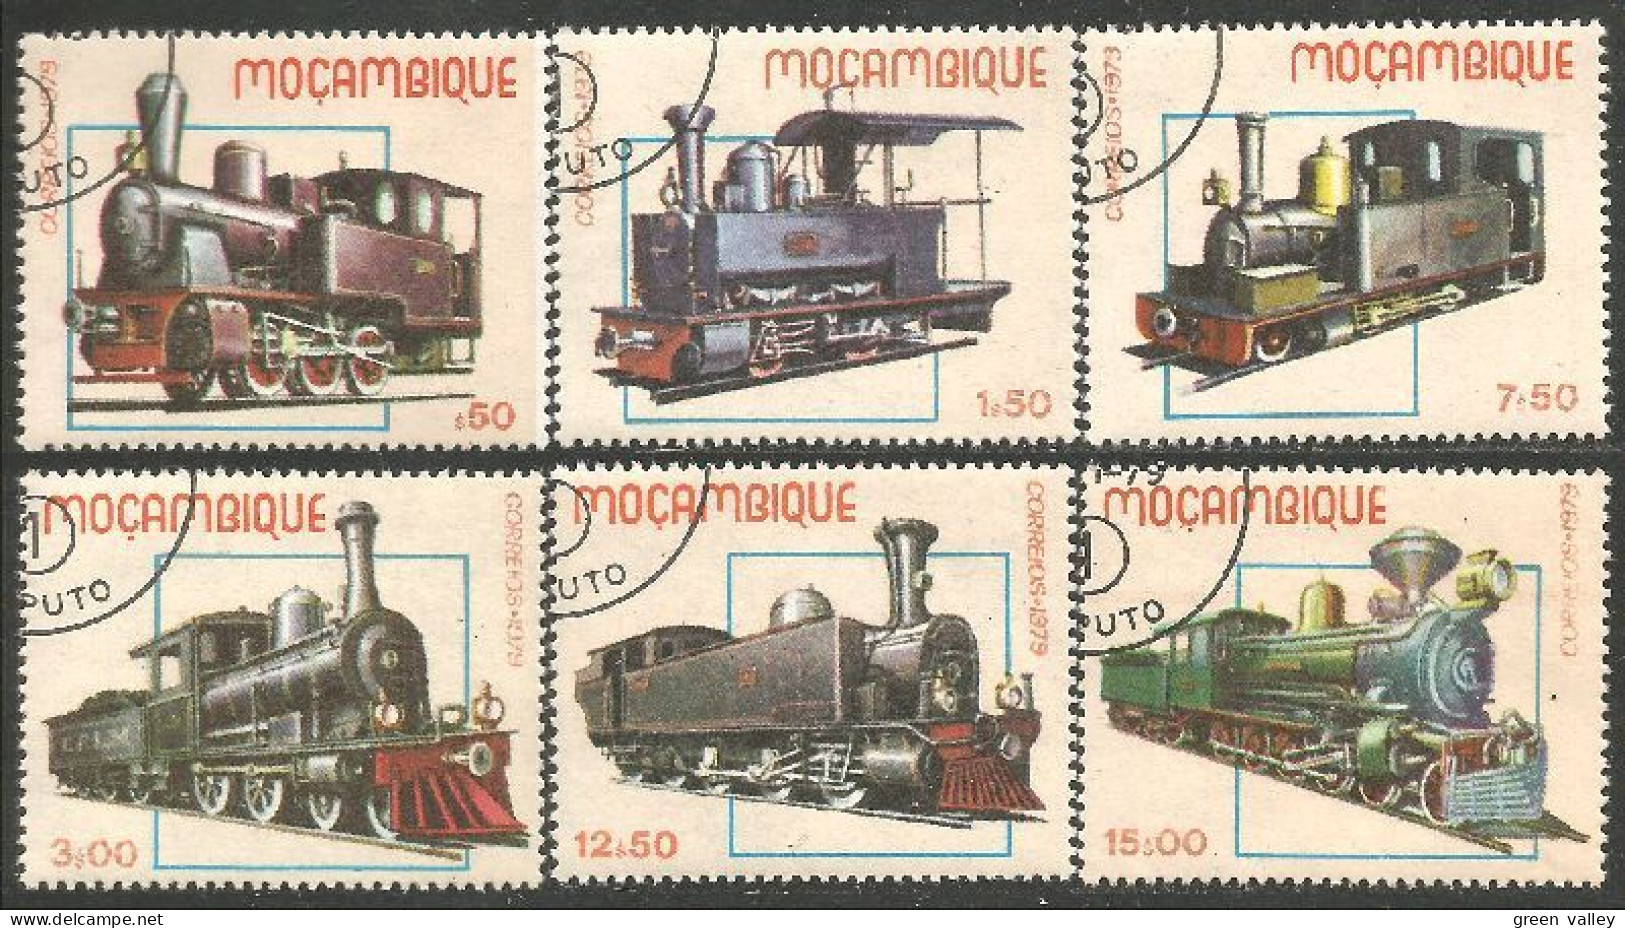 TR-51a Mozambique Train Locomotive Lokomotive Zug Treno - Eisenbahnen